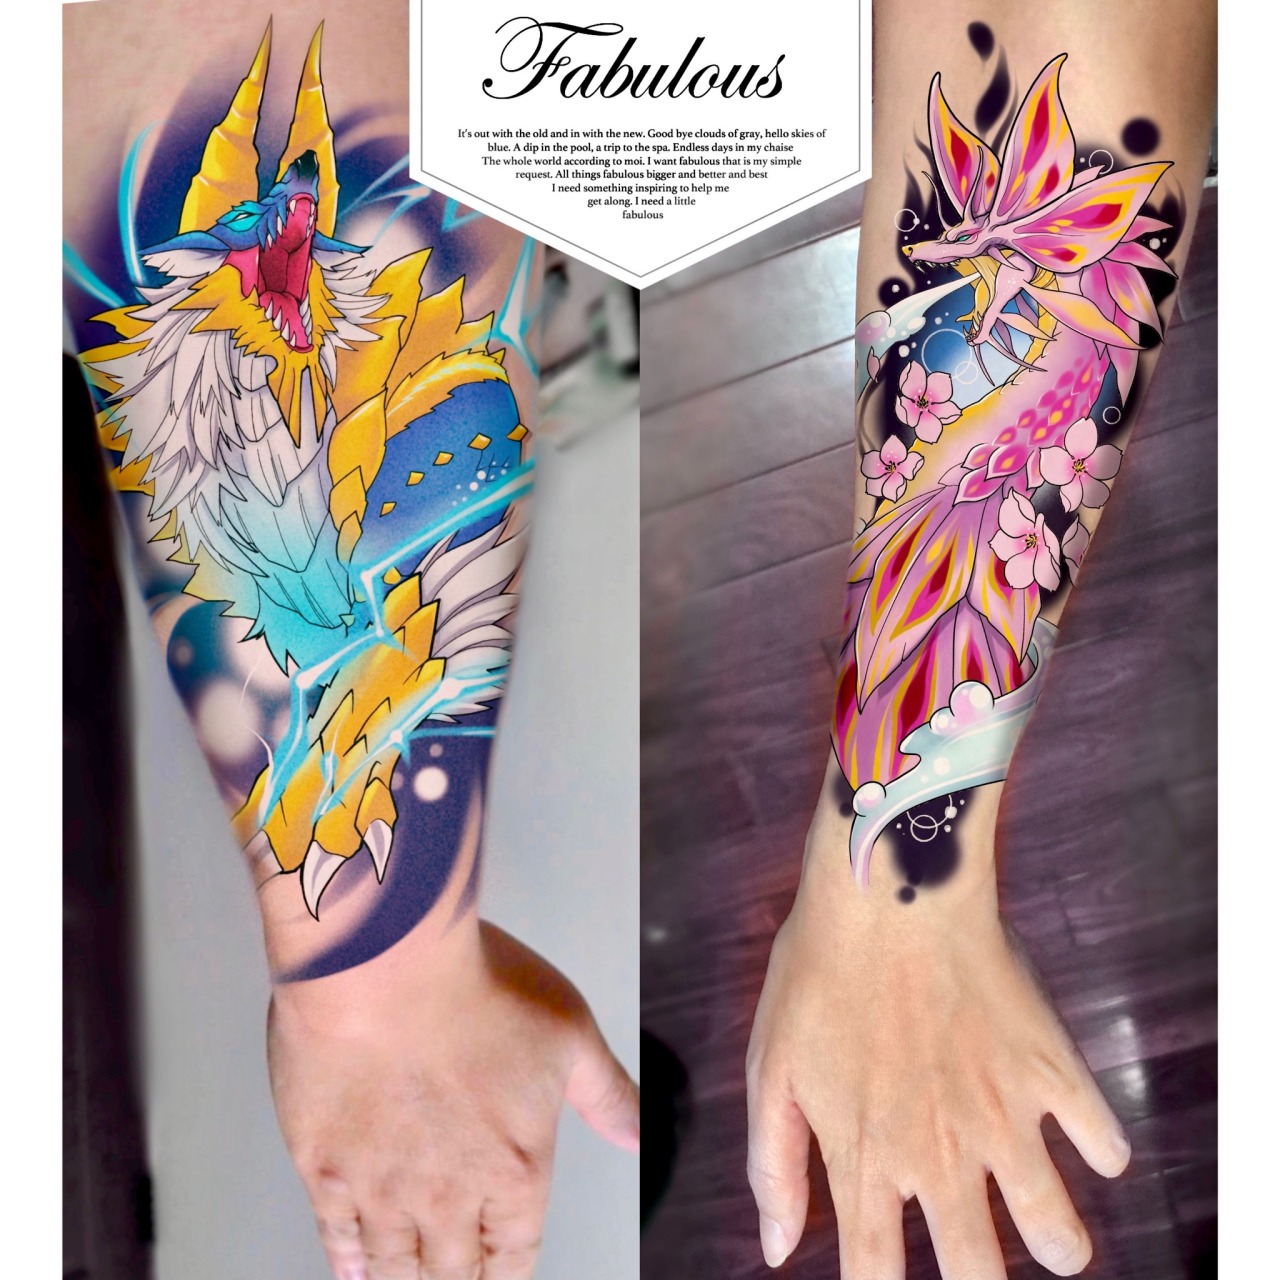 Infinite Worlds Tattoo  Chibi Nergigante from Monster Hunter by Tom     tattoo tattoos tattooist tattooer ink inked flash flashtattoo  tattooflash apprentice apprenticetattooist adelaidetattooist  adelaidetattoo australiantattoo 